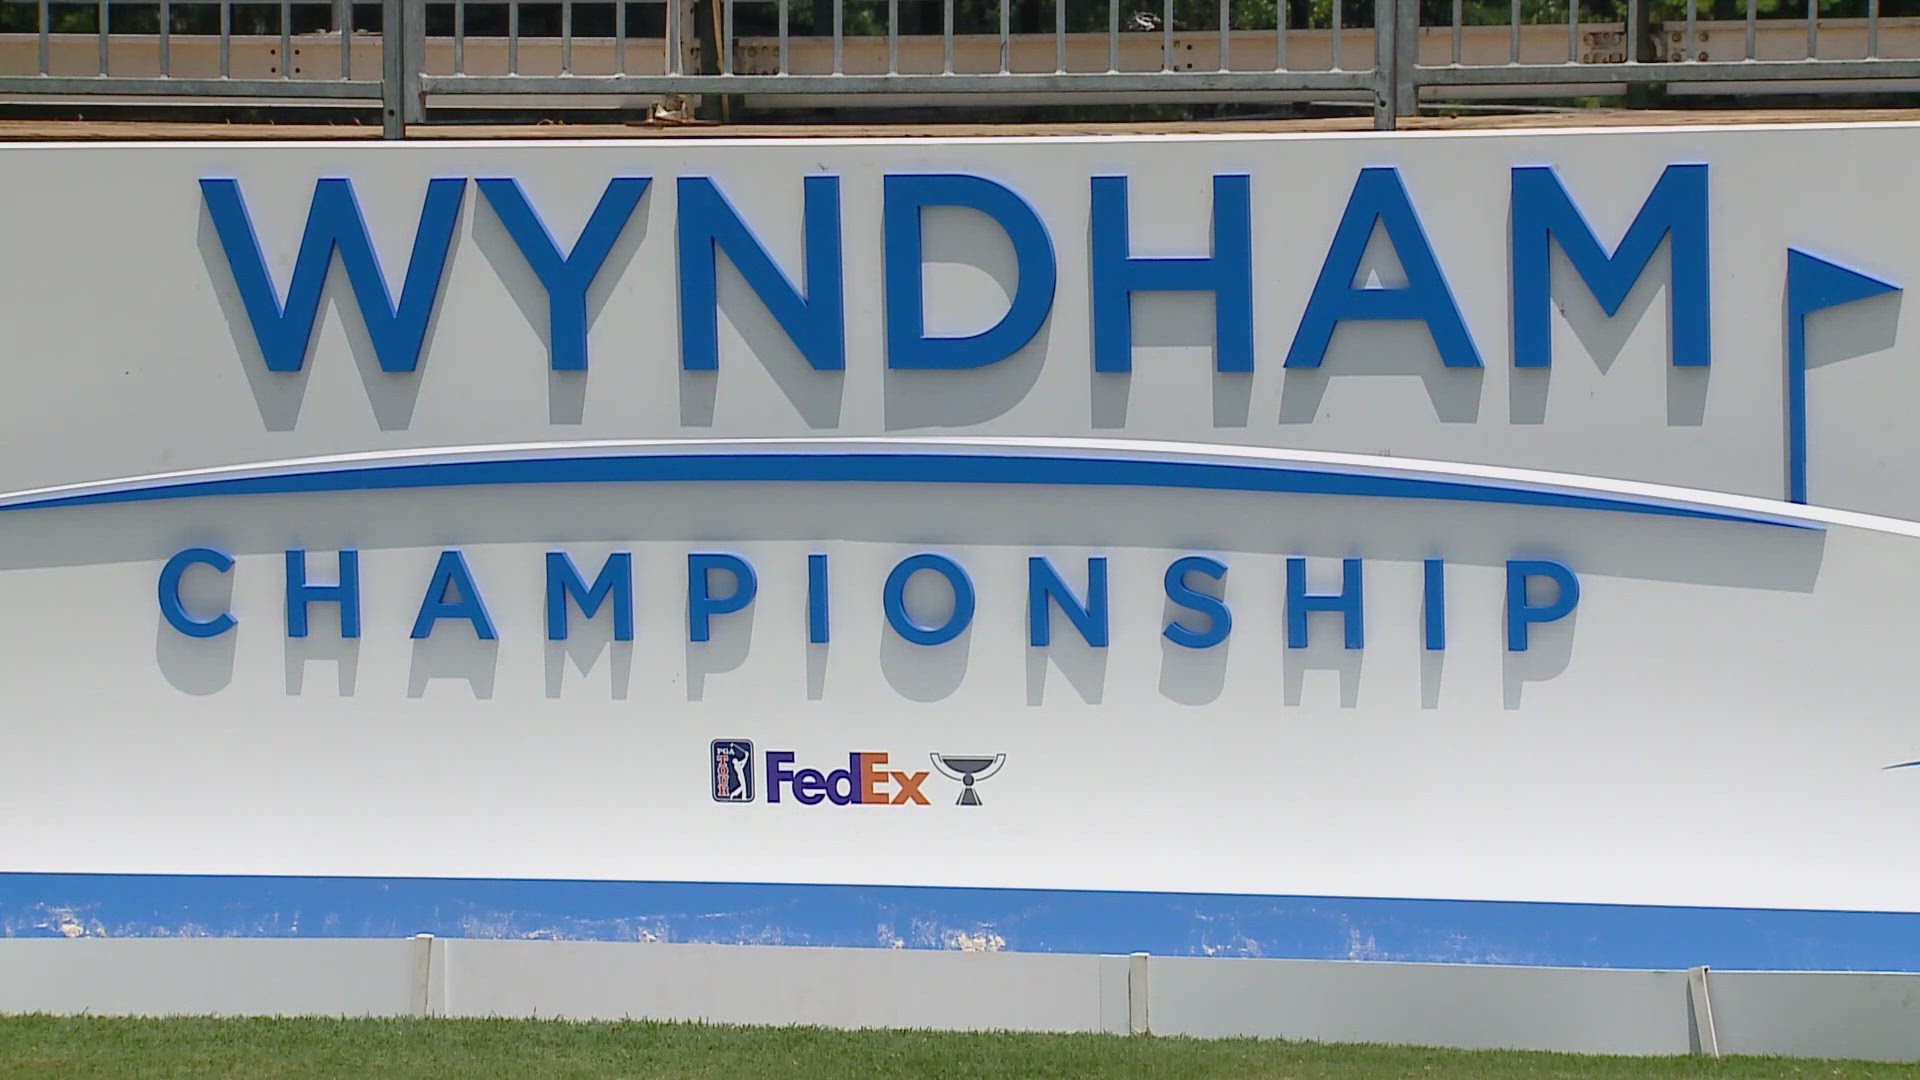 Crews ready as Wyndham Championship tees off with Pro-Am wfmynews2